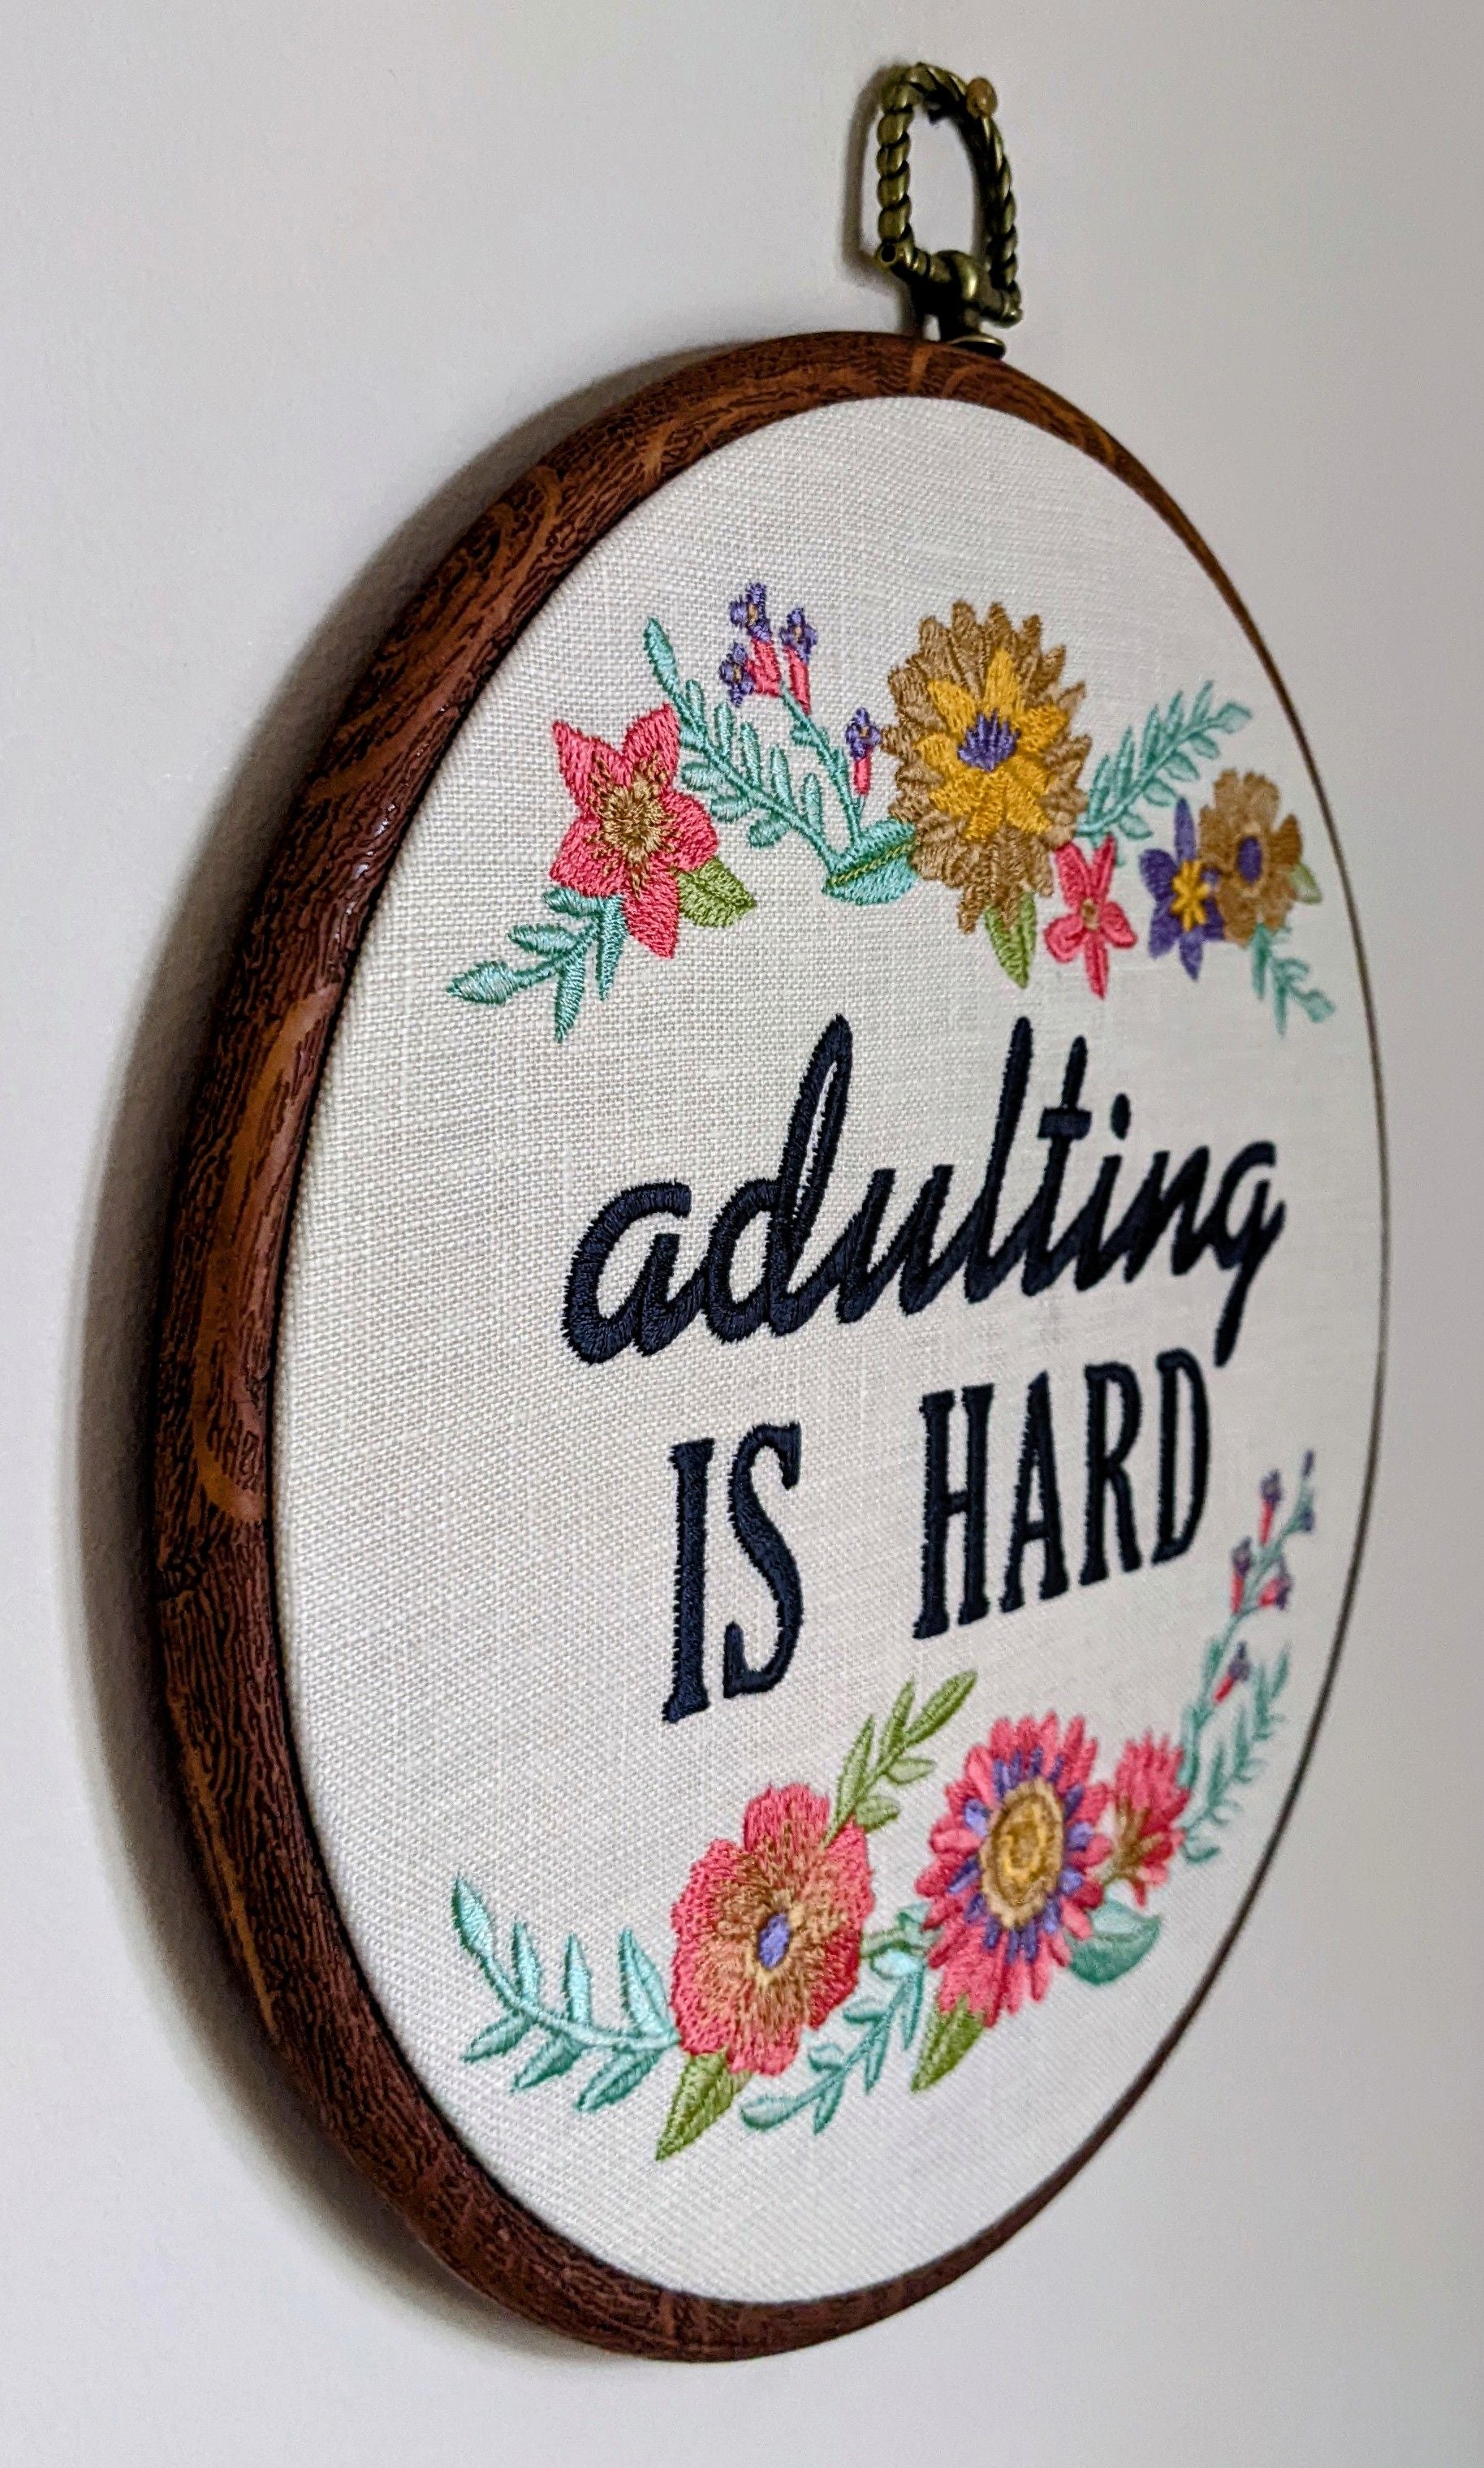 Adulting is hard, machine embroidery 8" hoop art